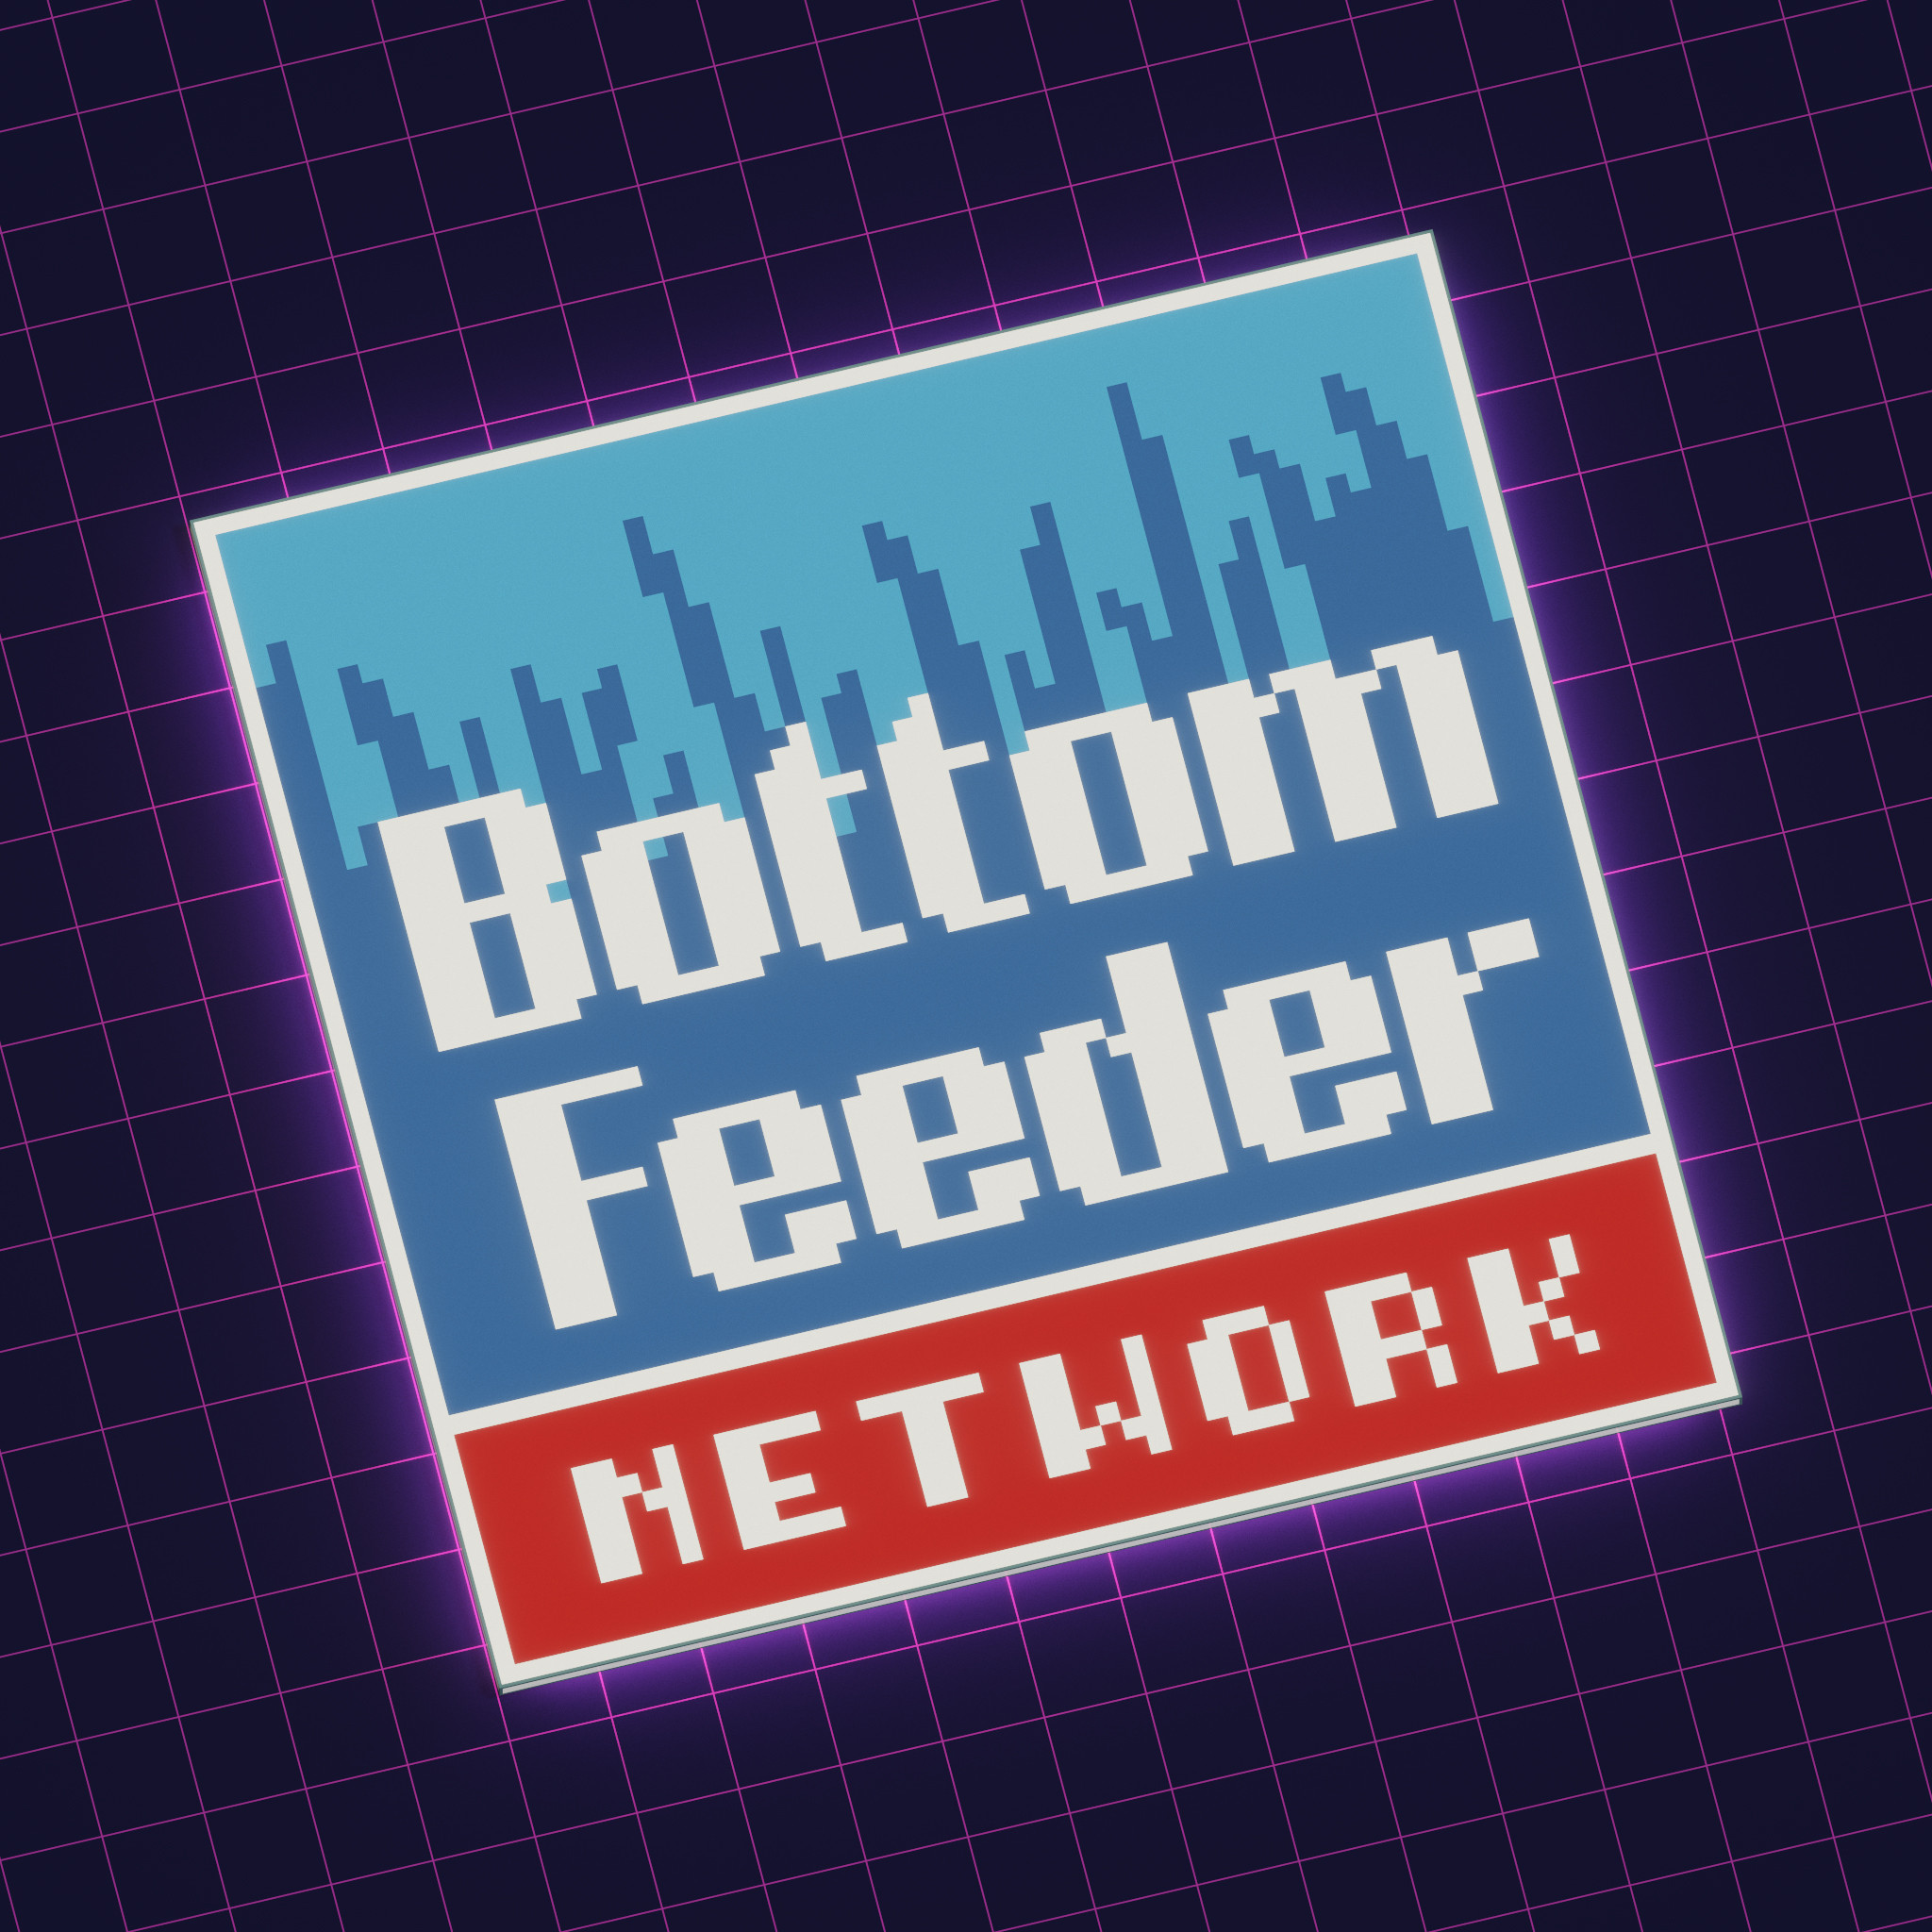 Bottom Feeder Network Logo super-imposed against a retrowave background.